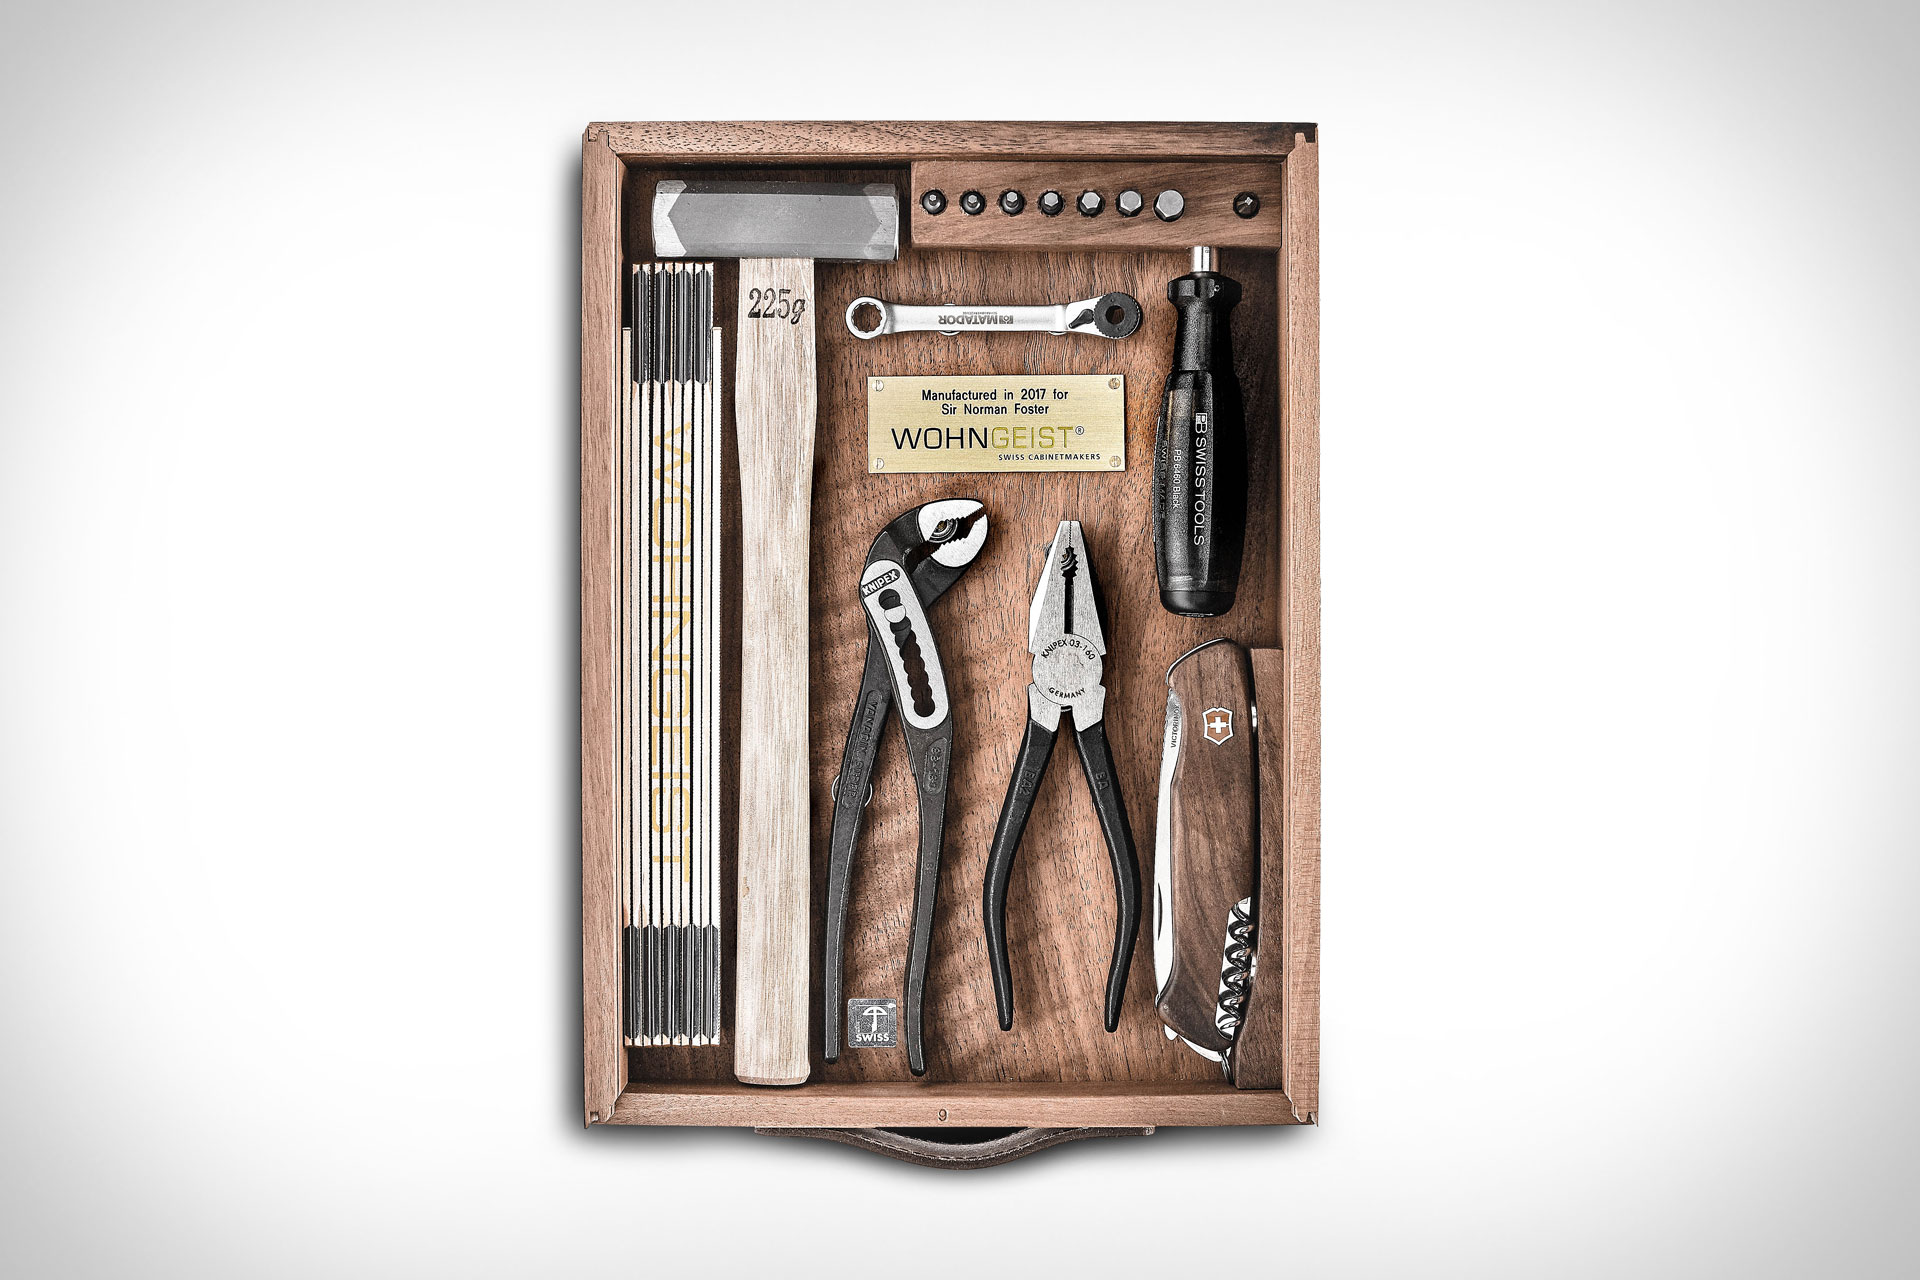 Flipboard Wohngeist Swiss Tool Box